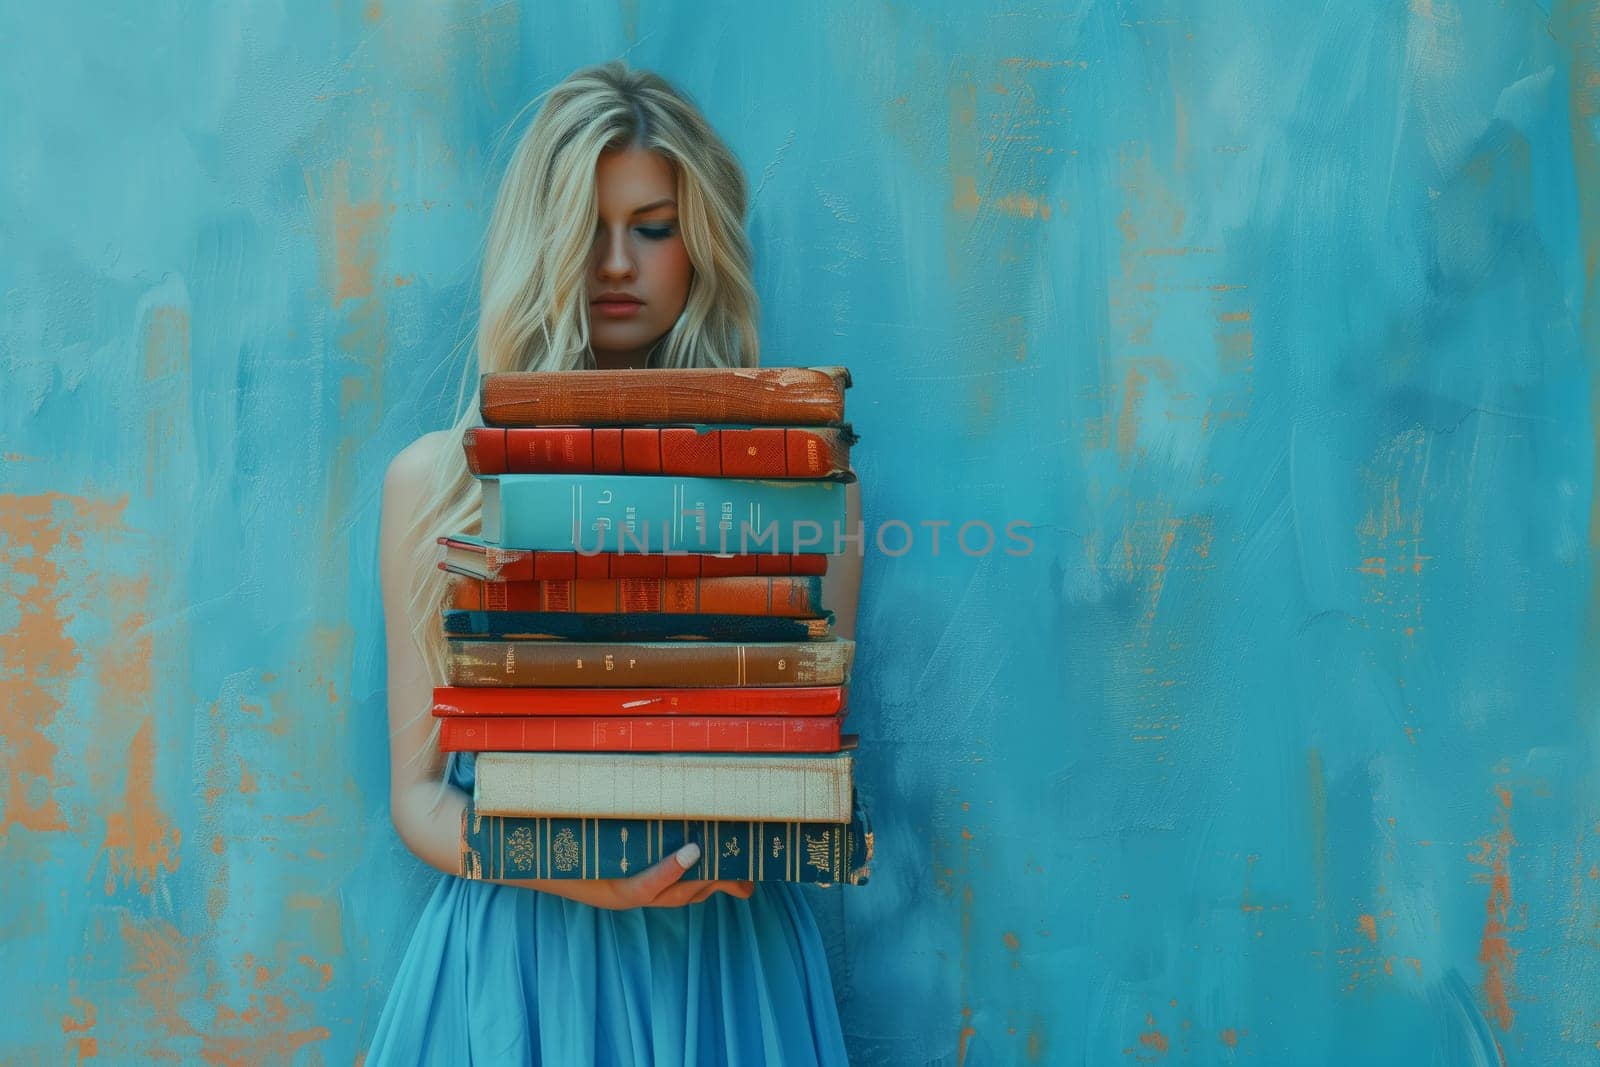 An artist in an azure dress is clutching a pile of books by richwolf